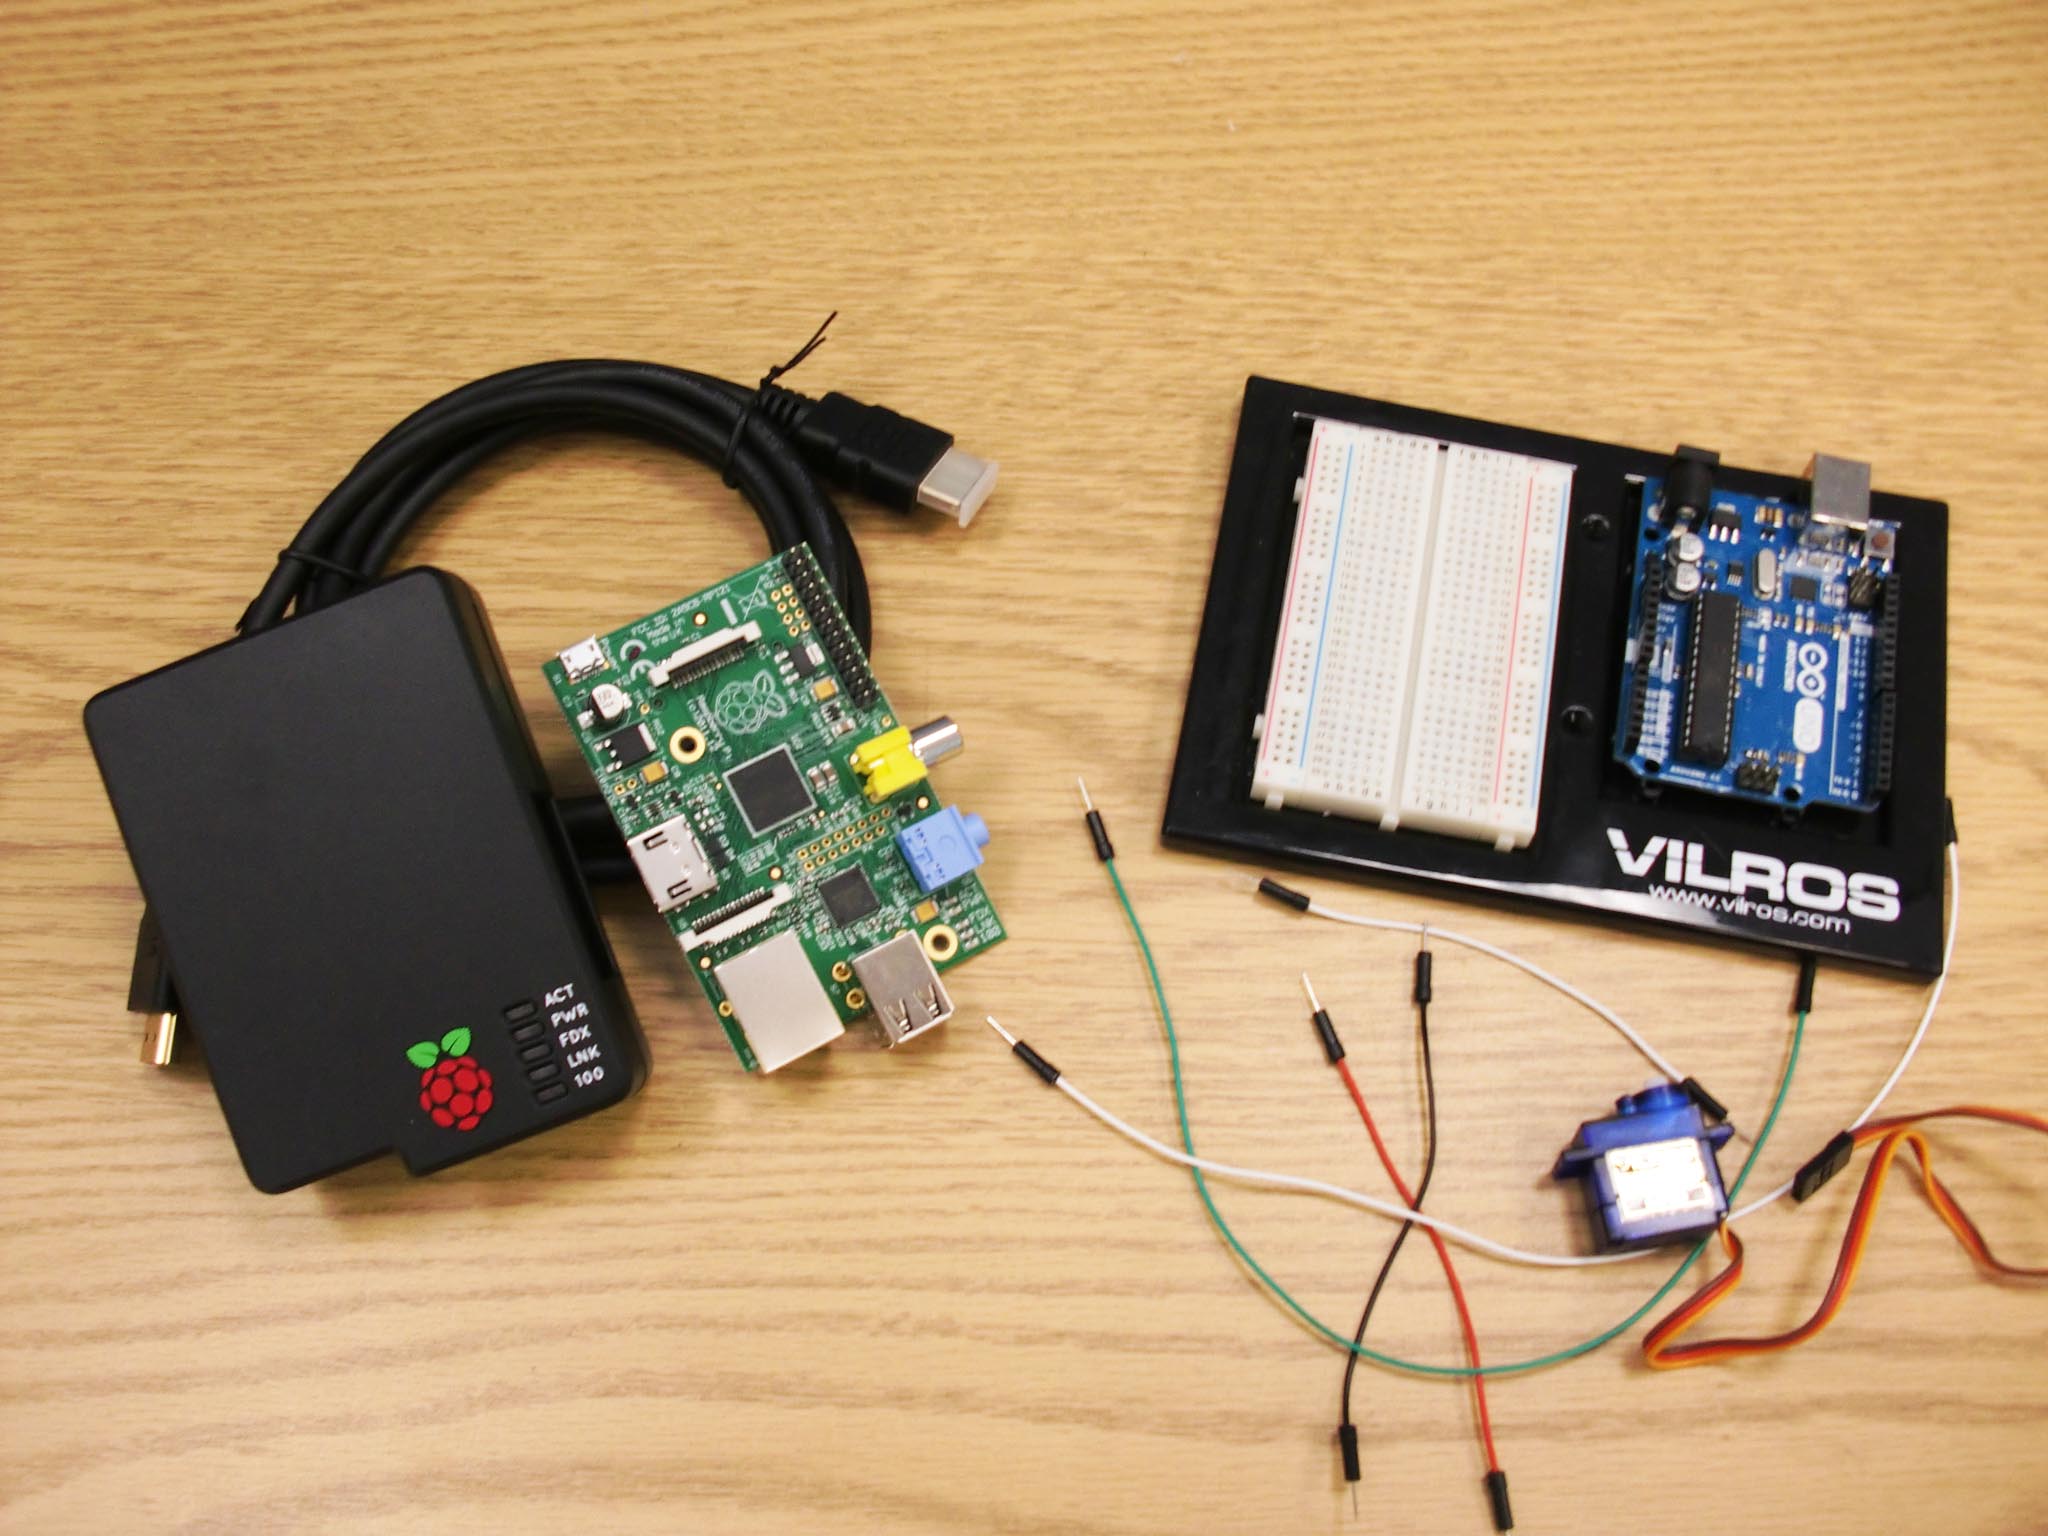 Raspberry Pi and Arduino